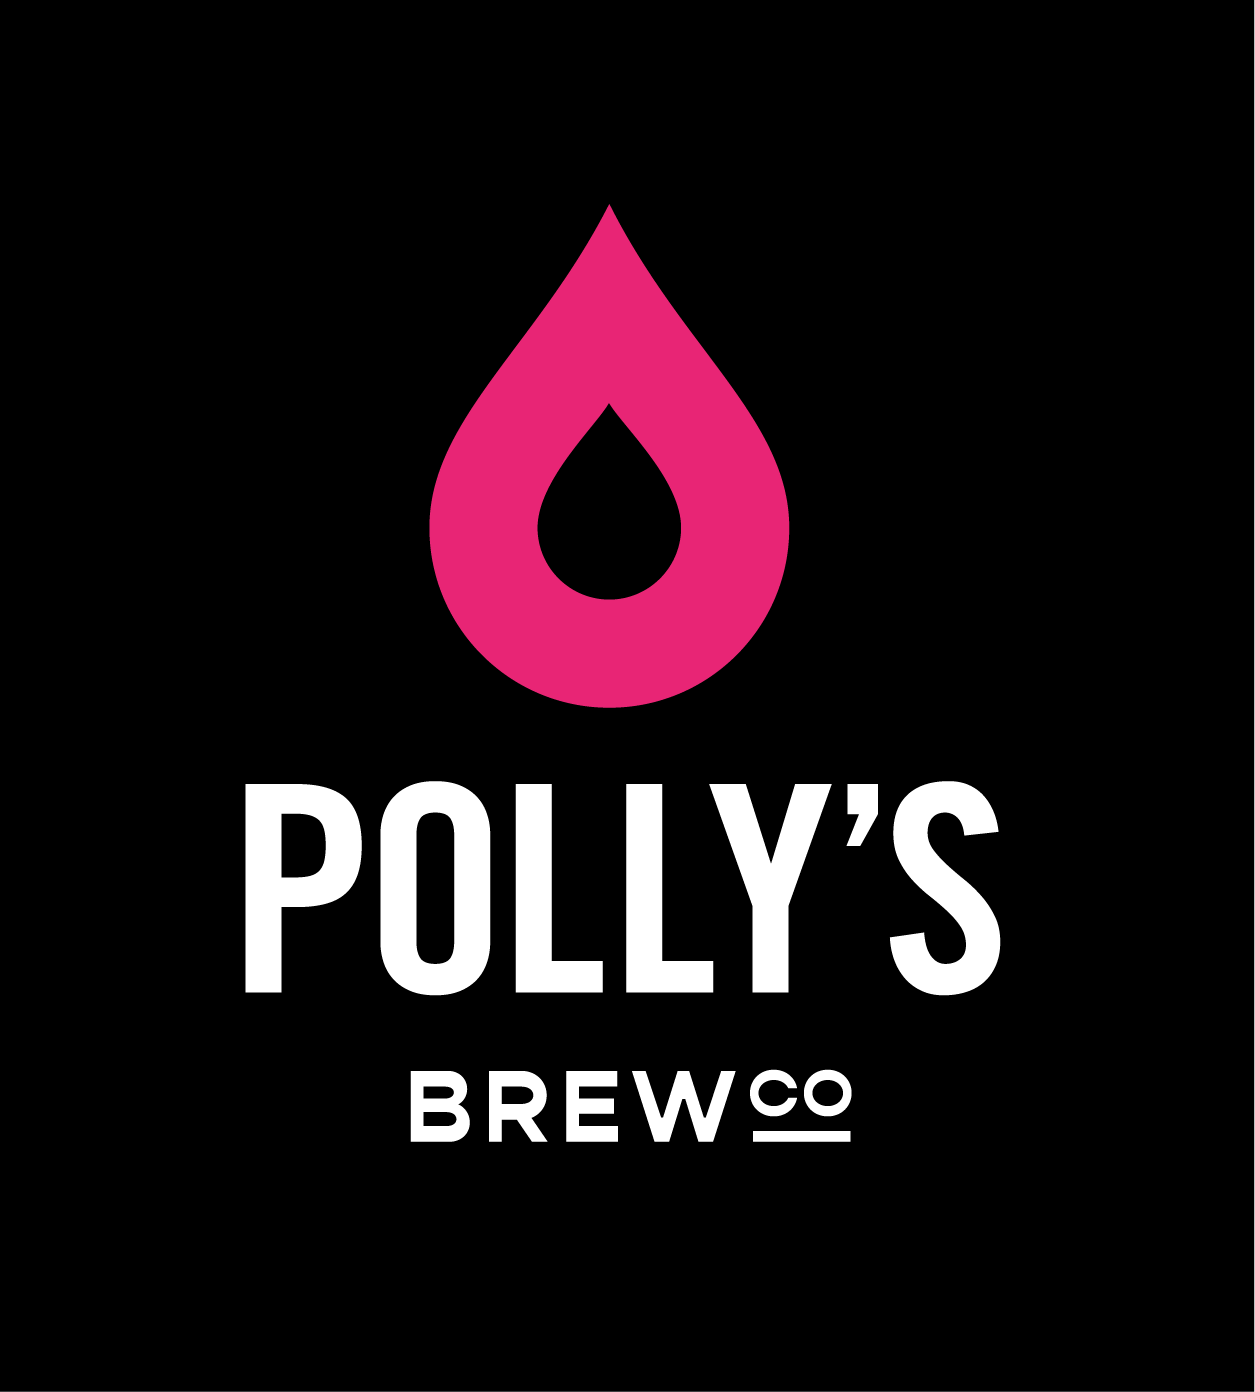 pollysbrew.co